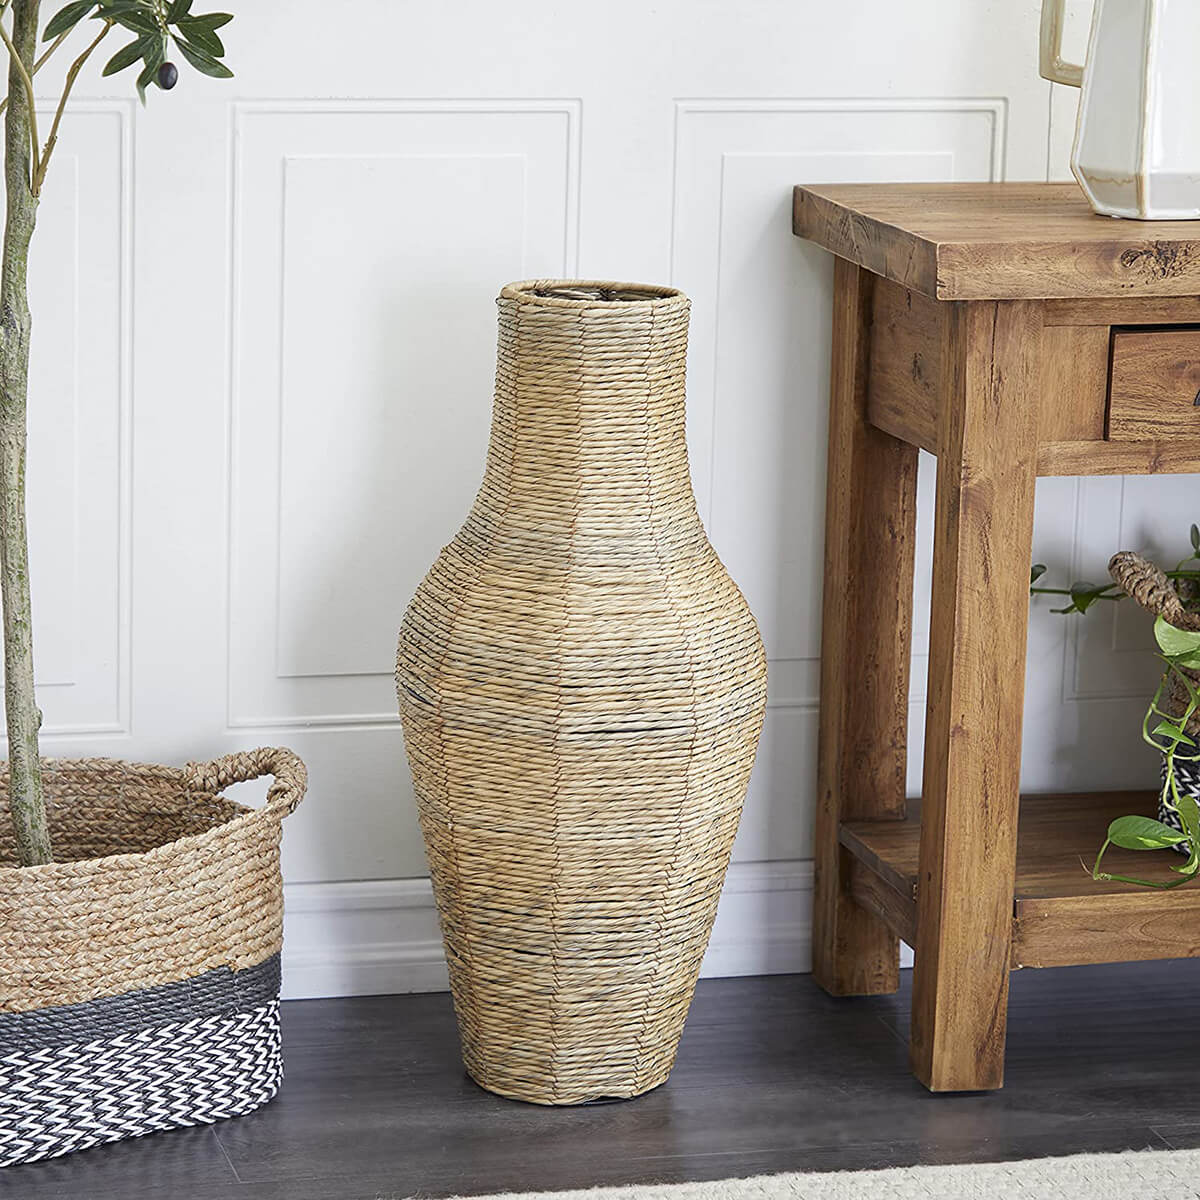 Woven Floor Vase with Coastal Vibes